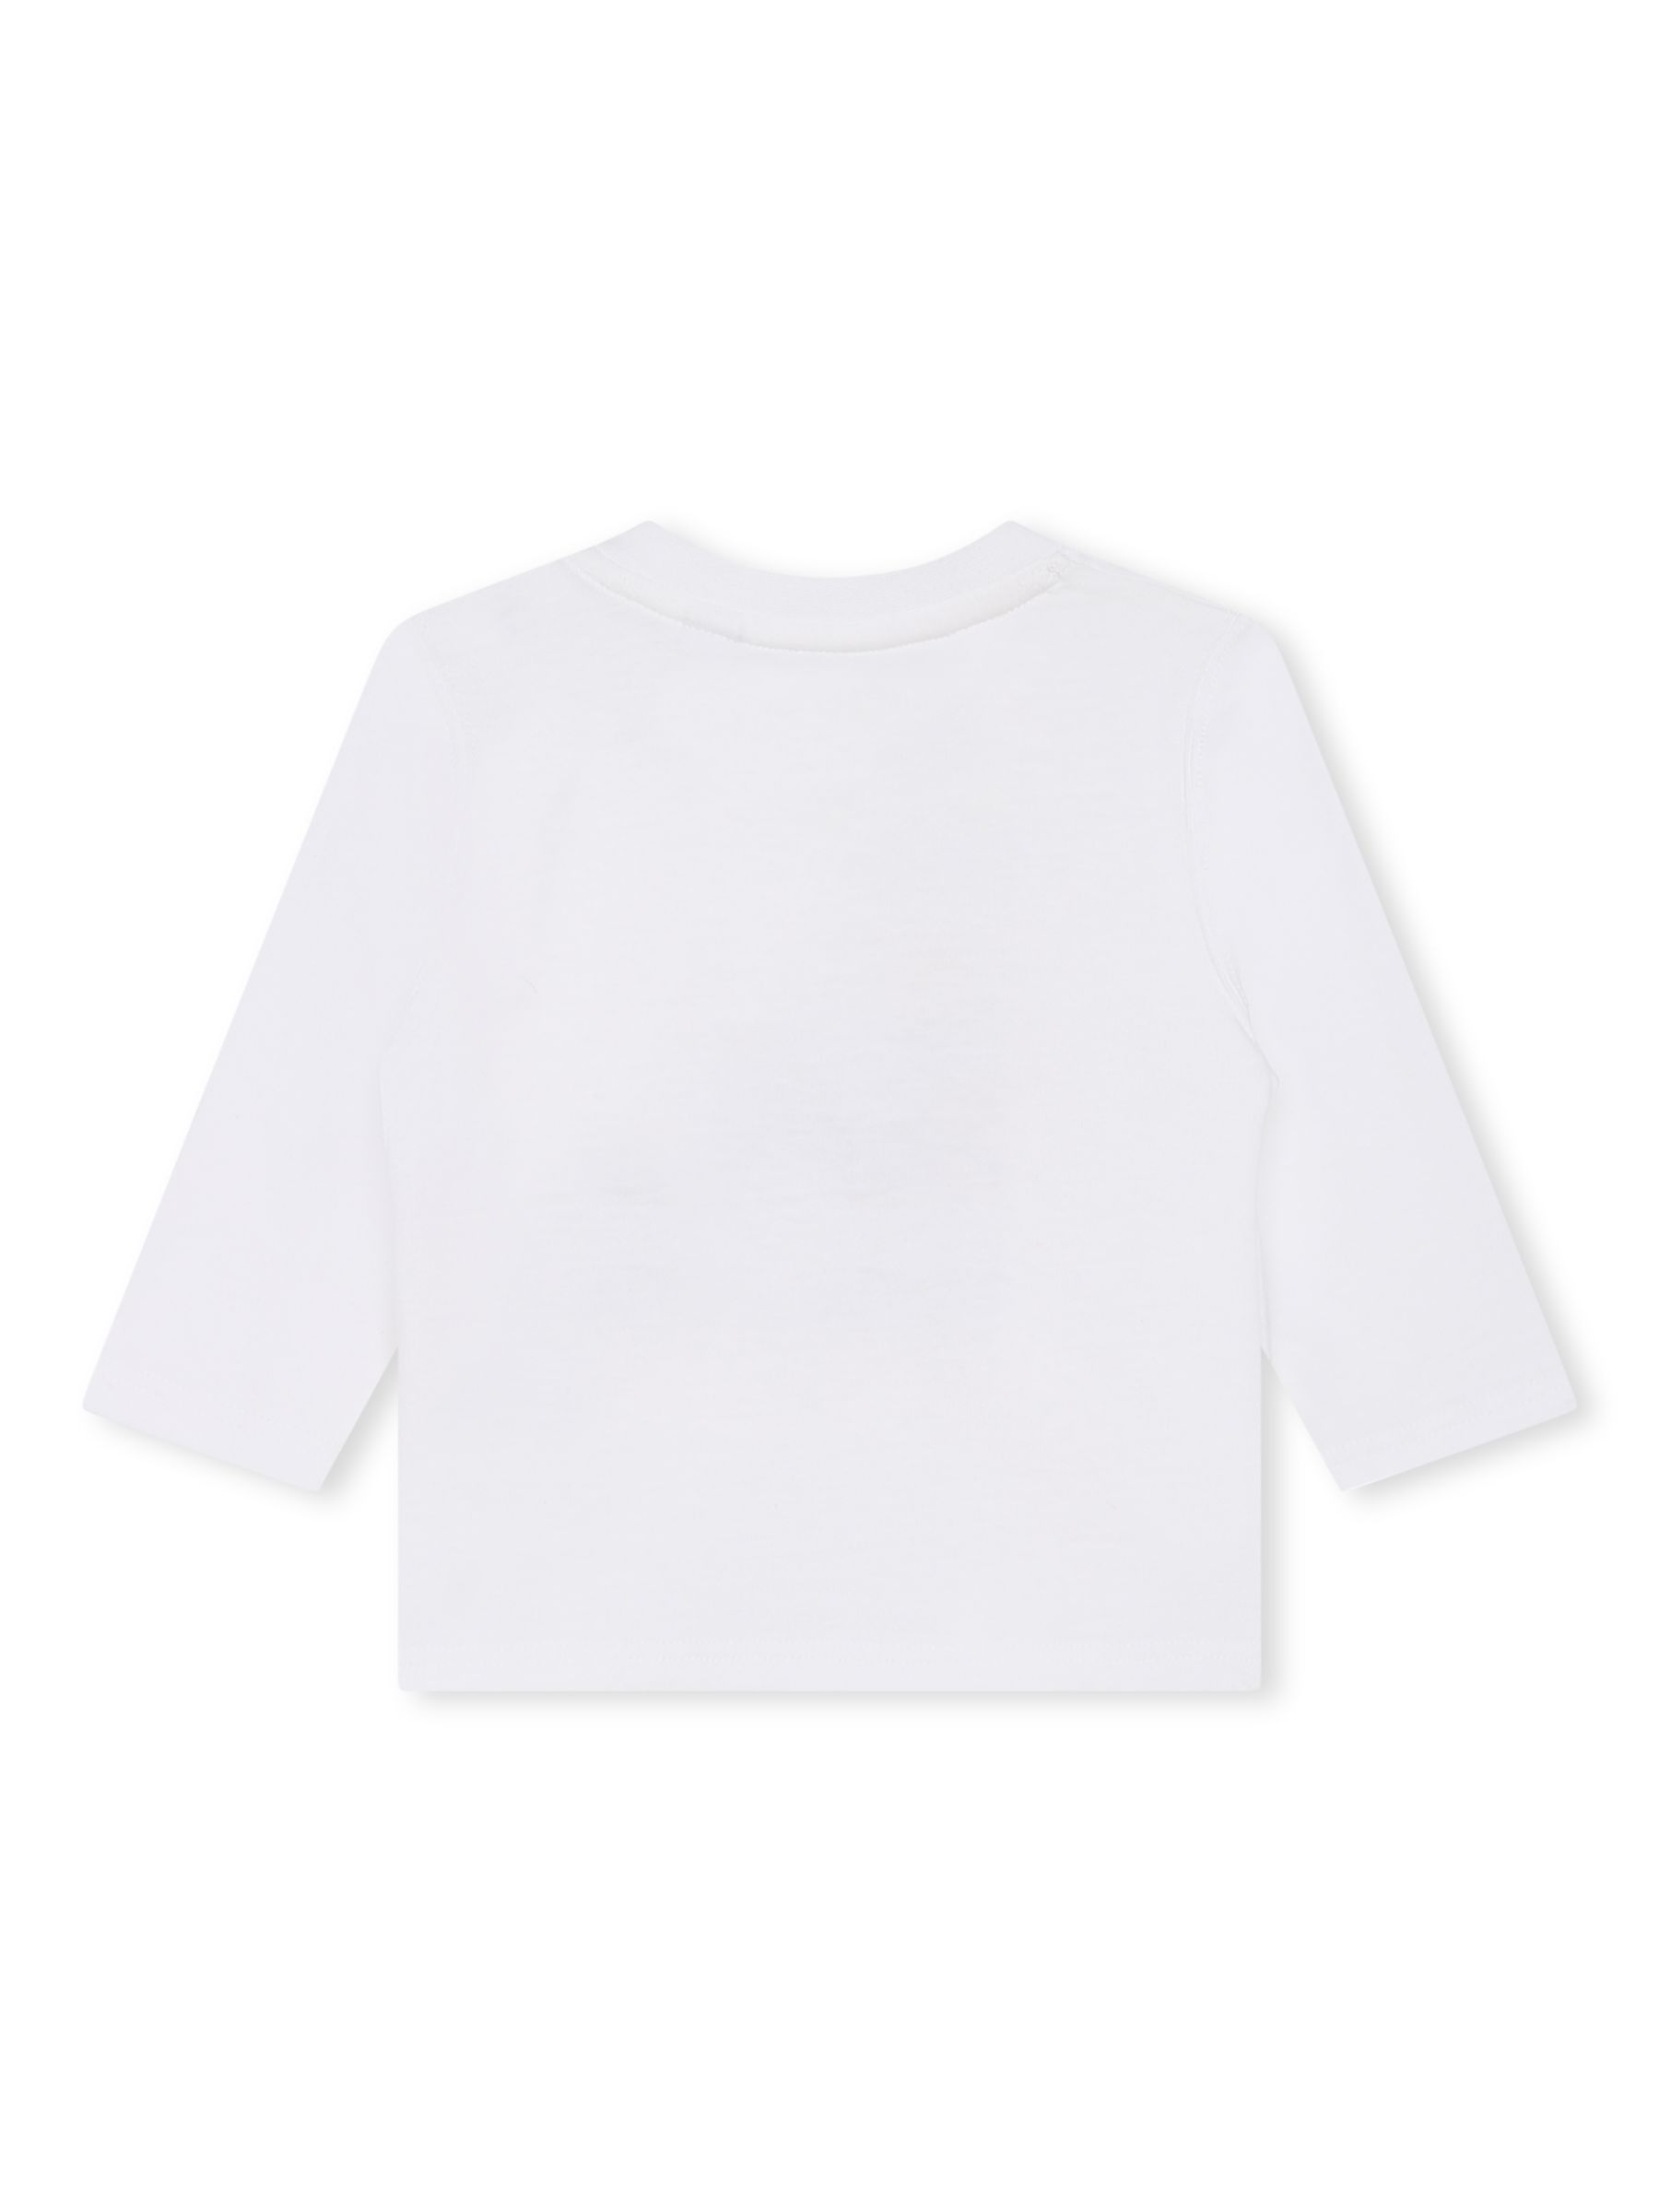 Timberland Kids' Cotton Long Sleeve T-shirt, White at John Lewis & Partners